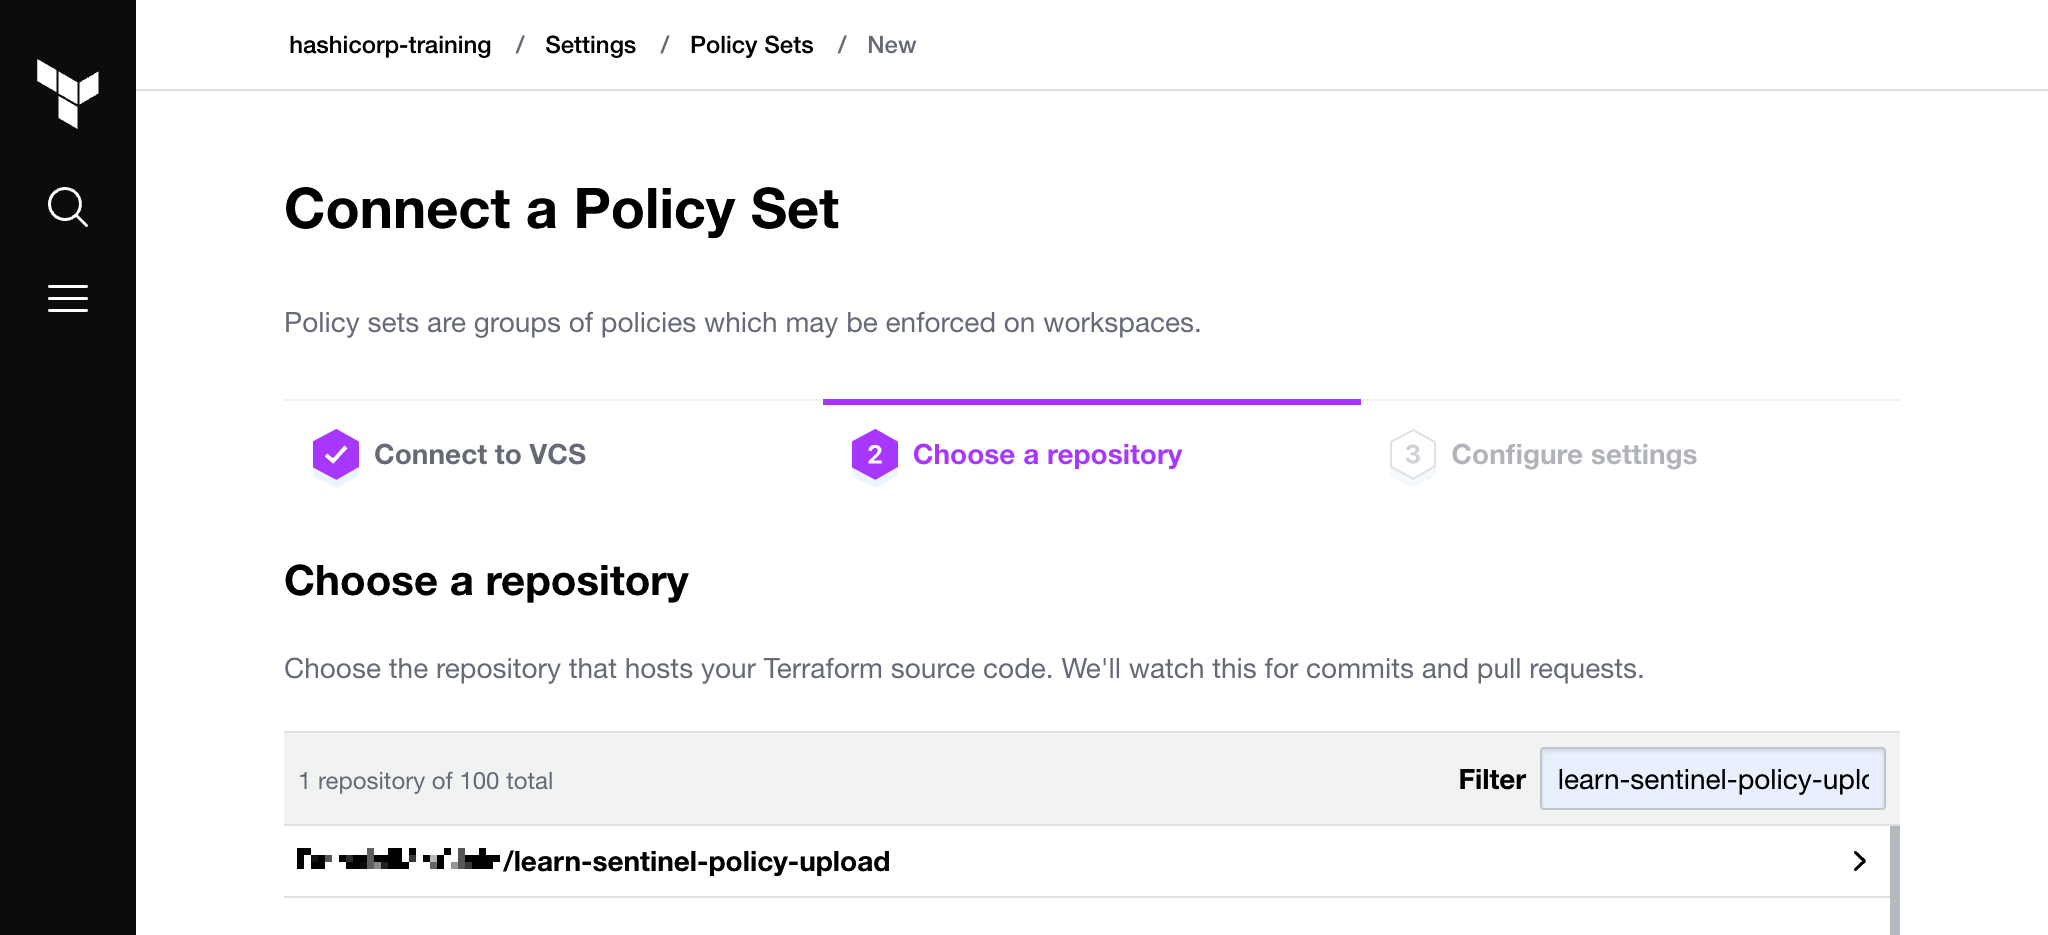 Configure policy set workspaces